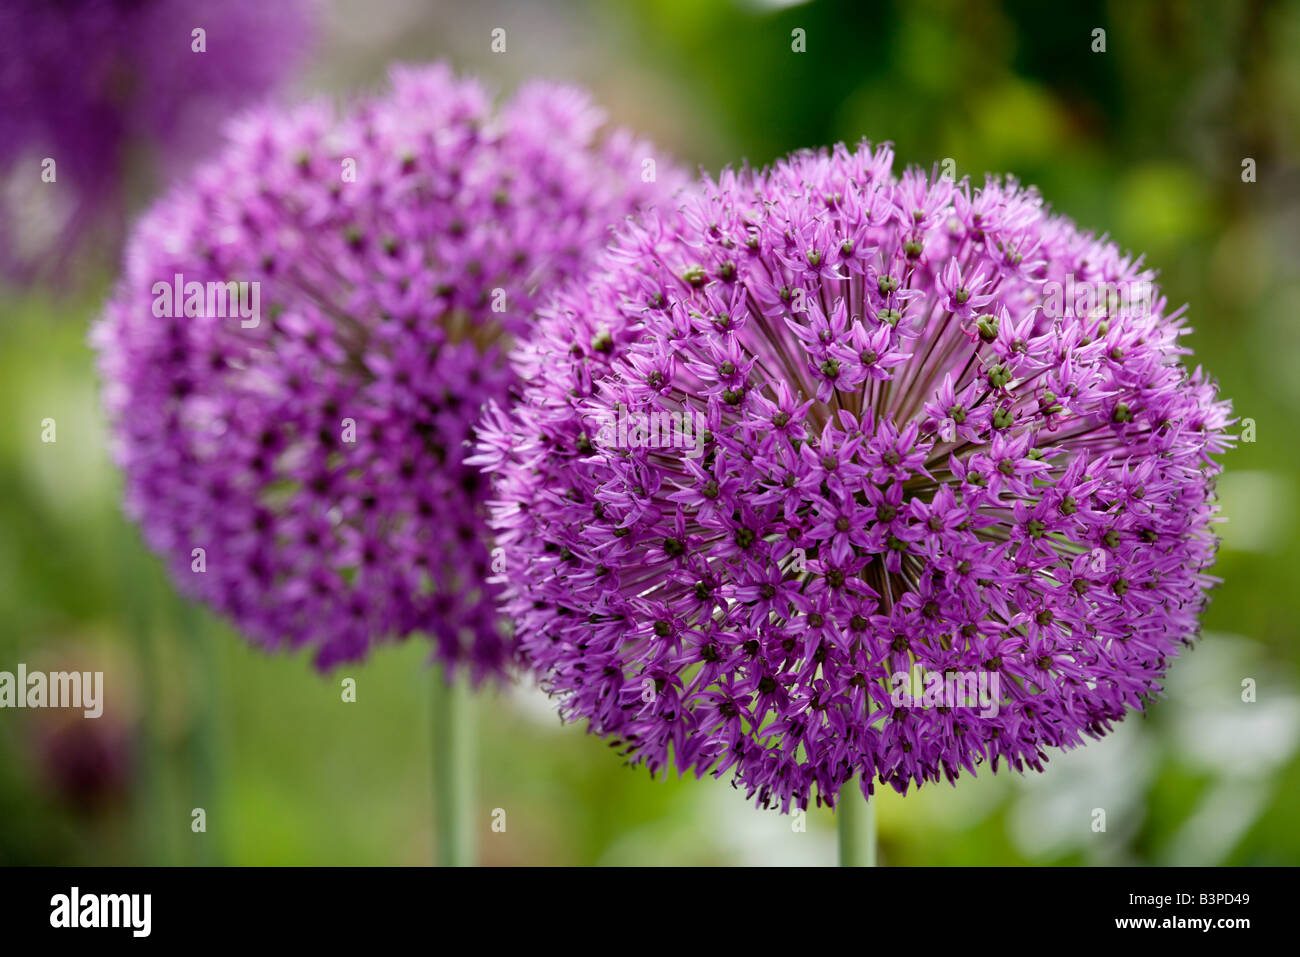 Star of Persia flowers (Allium christophii), close-up Stock Photo